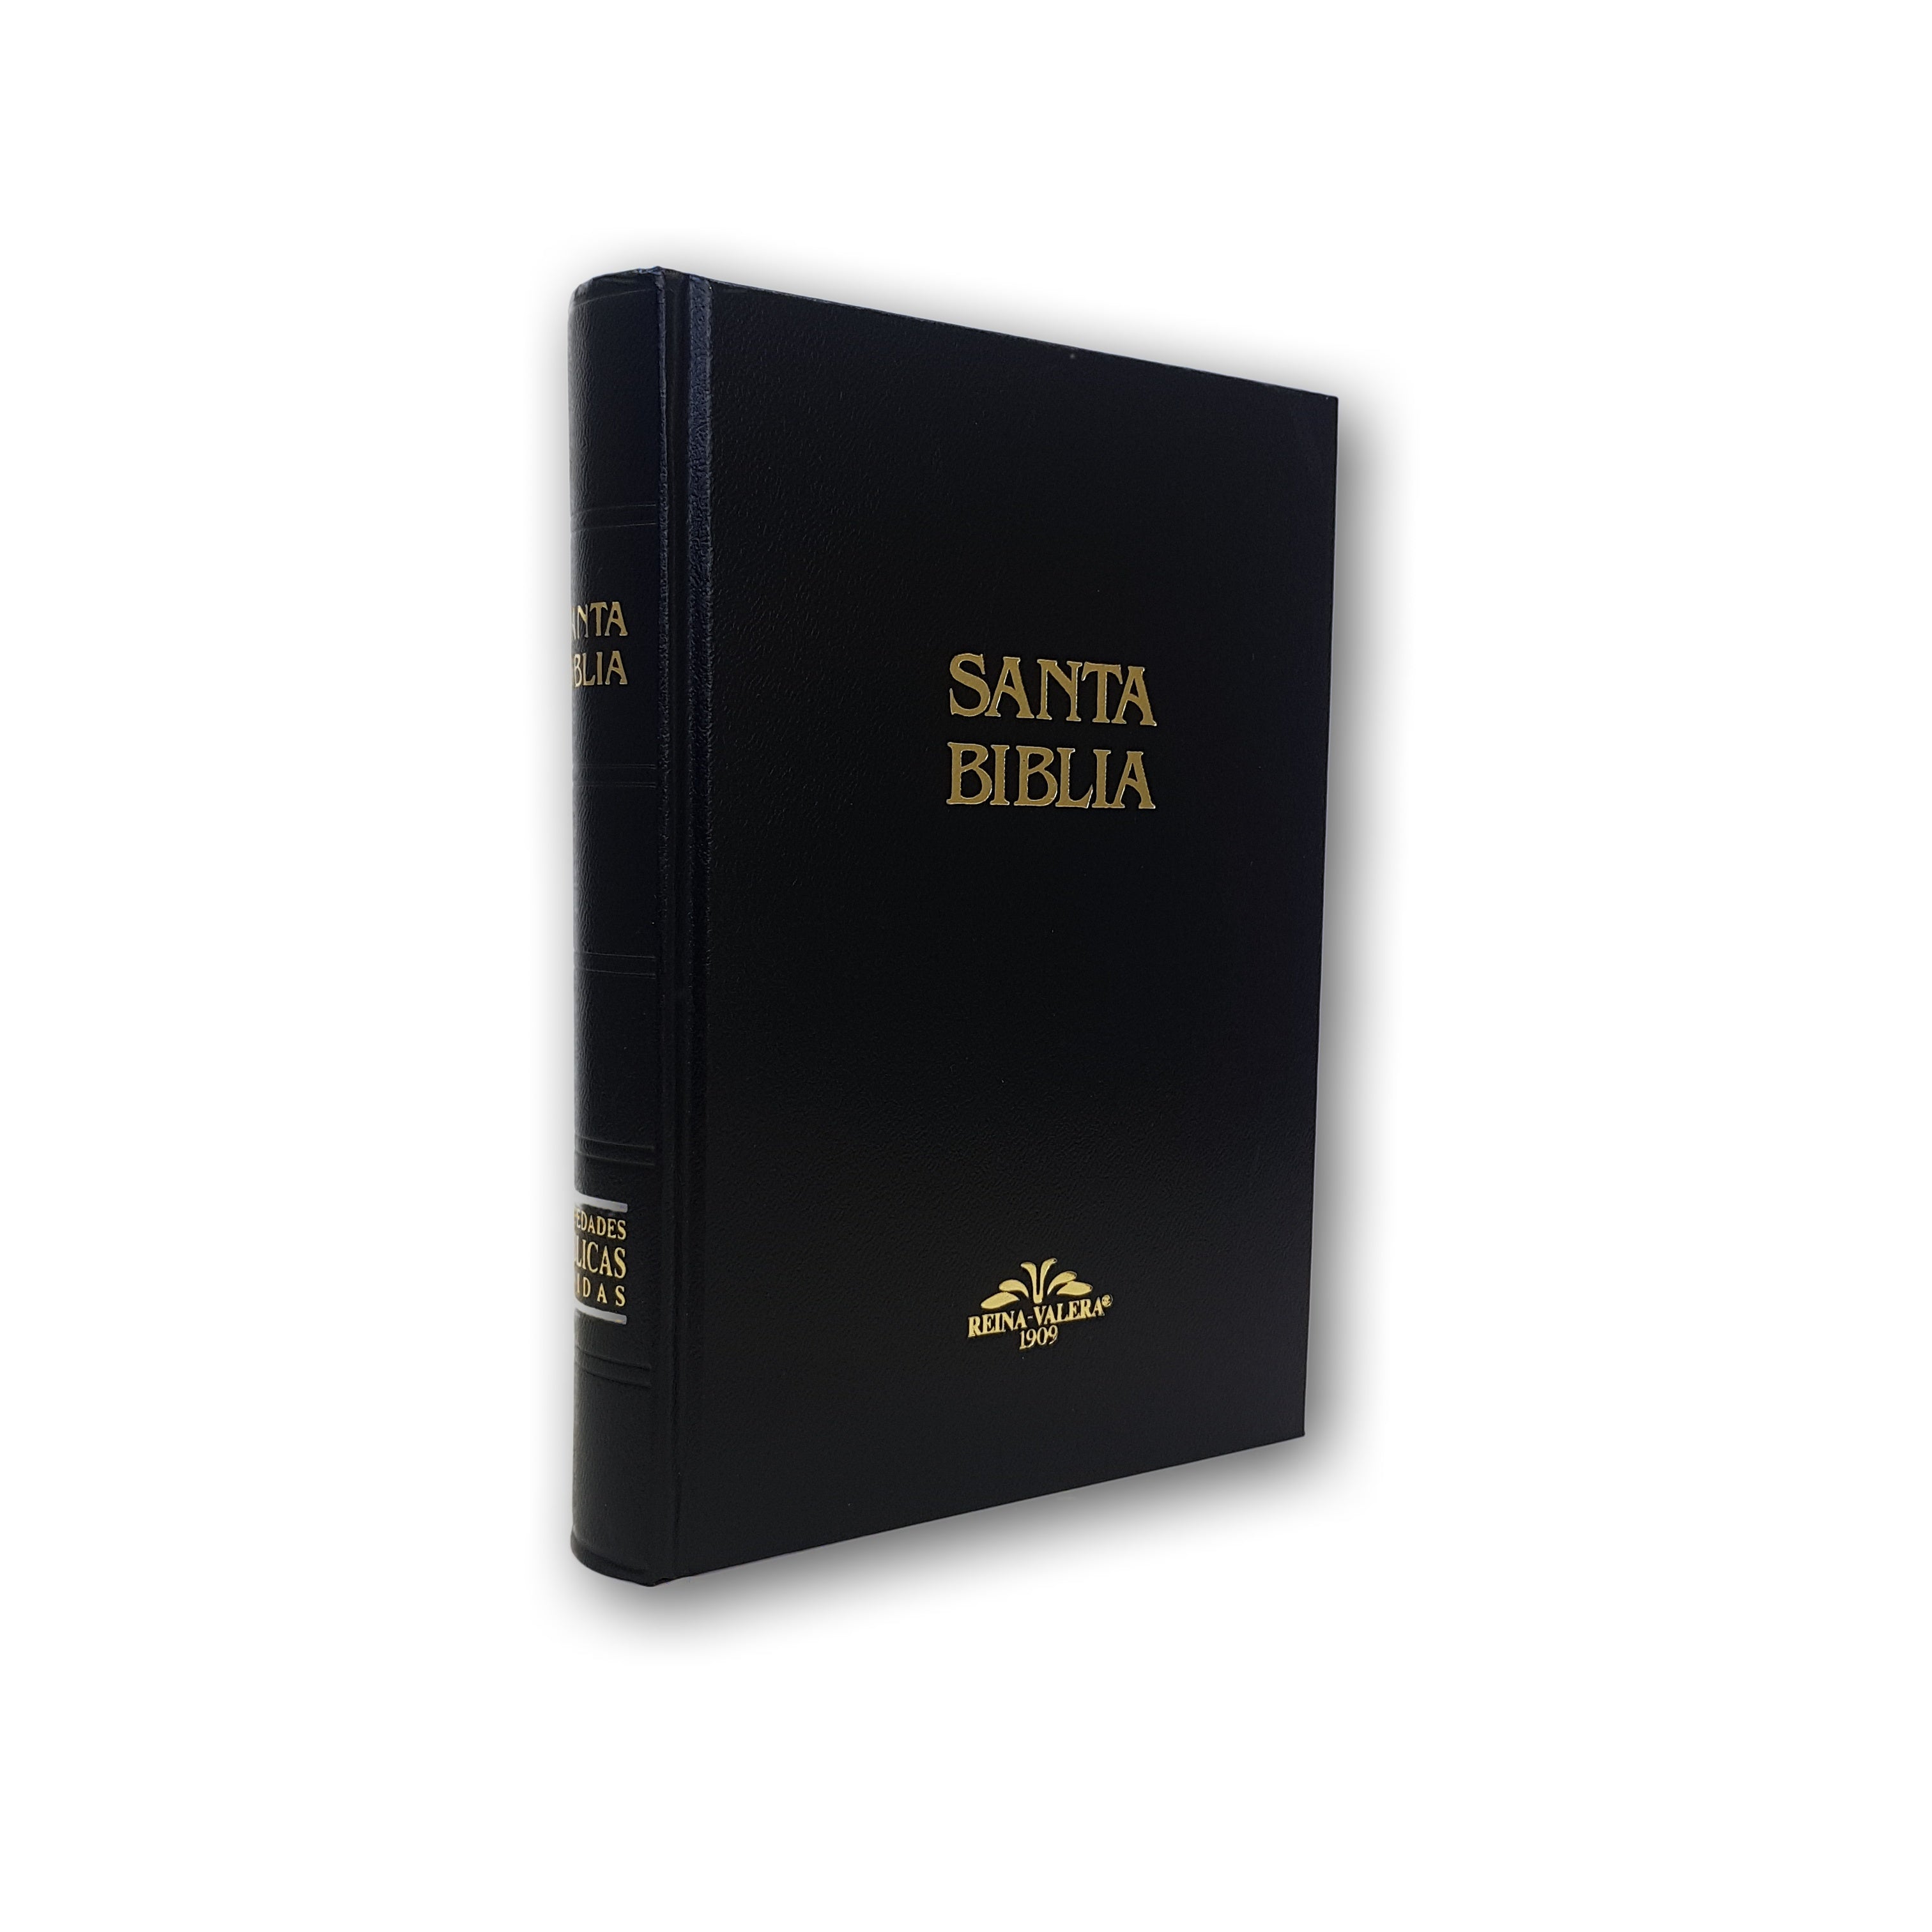 Santa Biblia RVR1909 Tapa dura negra